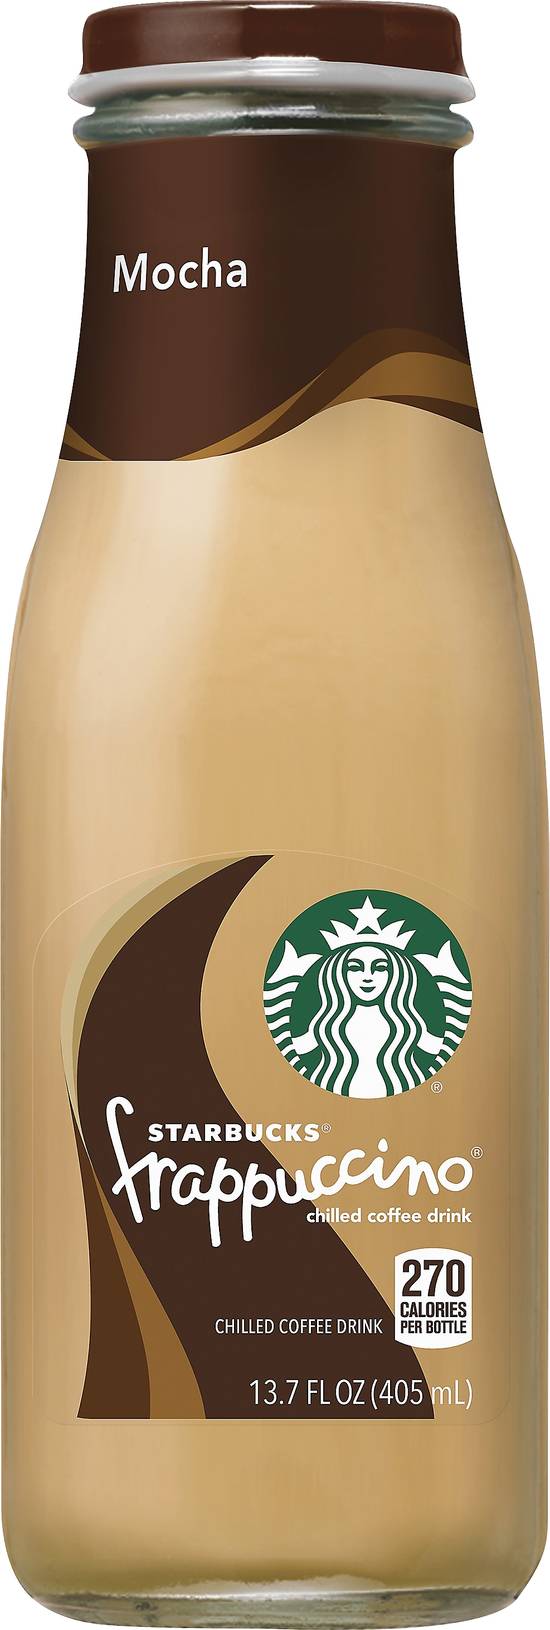 Starbucks Mocha Frappuccino Chilled Coffee Drink (13.7 fl oz)